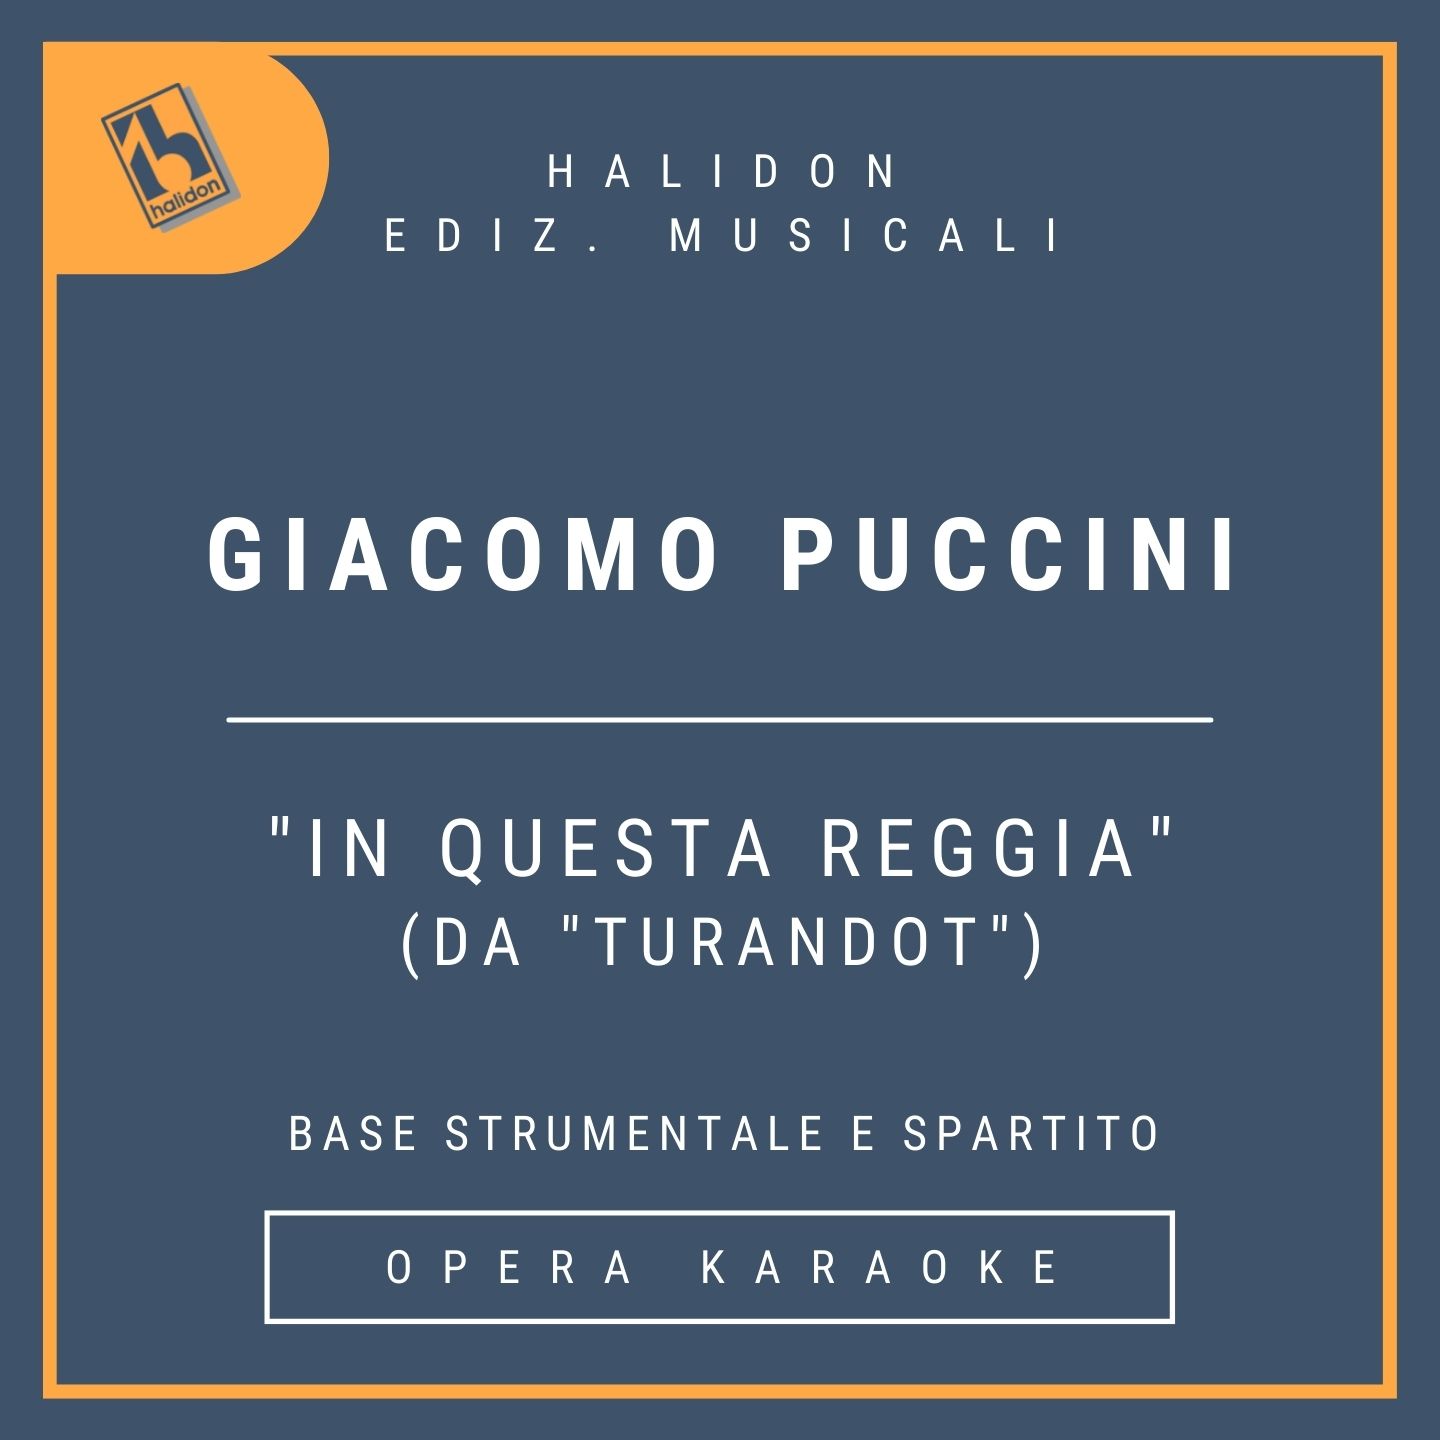 Giacomo Puccini - In questa reggia (from 'Turandot') - Turandot Aria (dramatic soprano) - Instrumental track + sheet